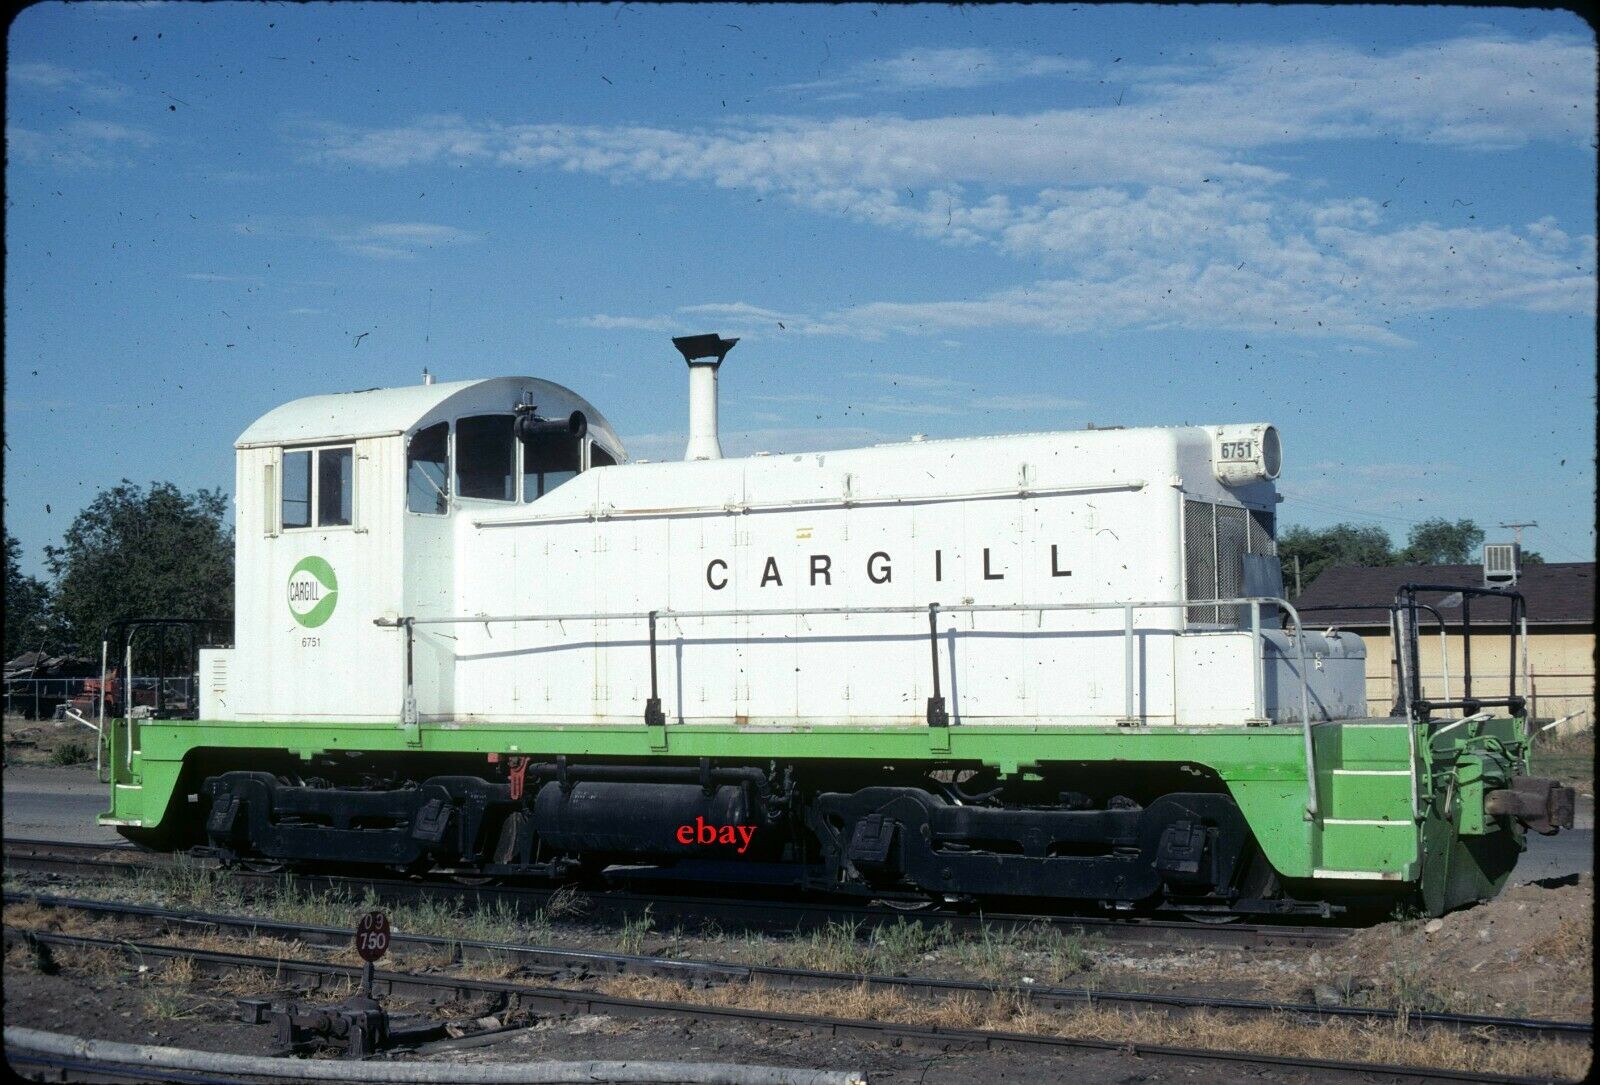 Jb Cargill 6751 - Original Slide - Ogden, Ut